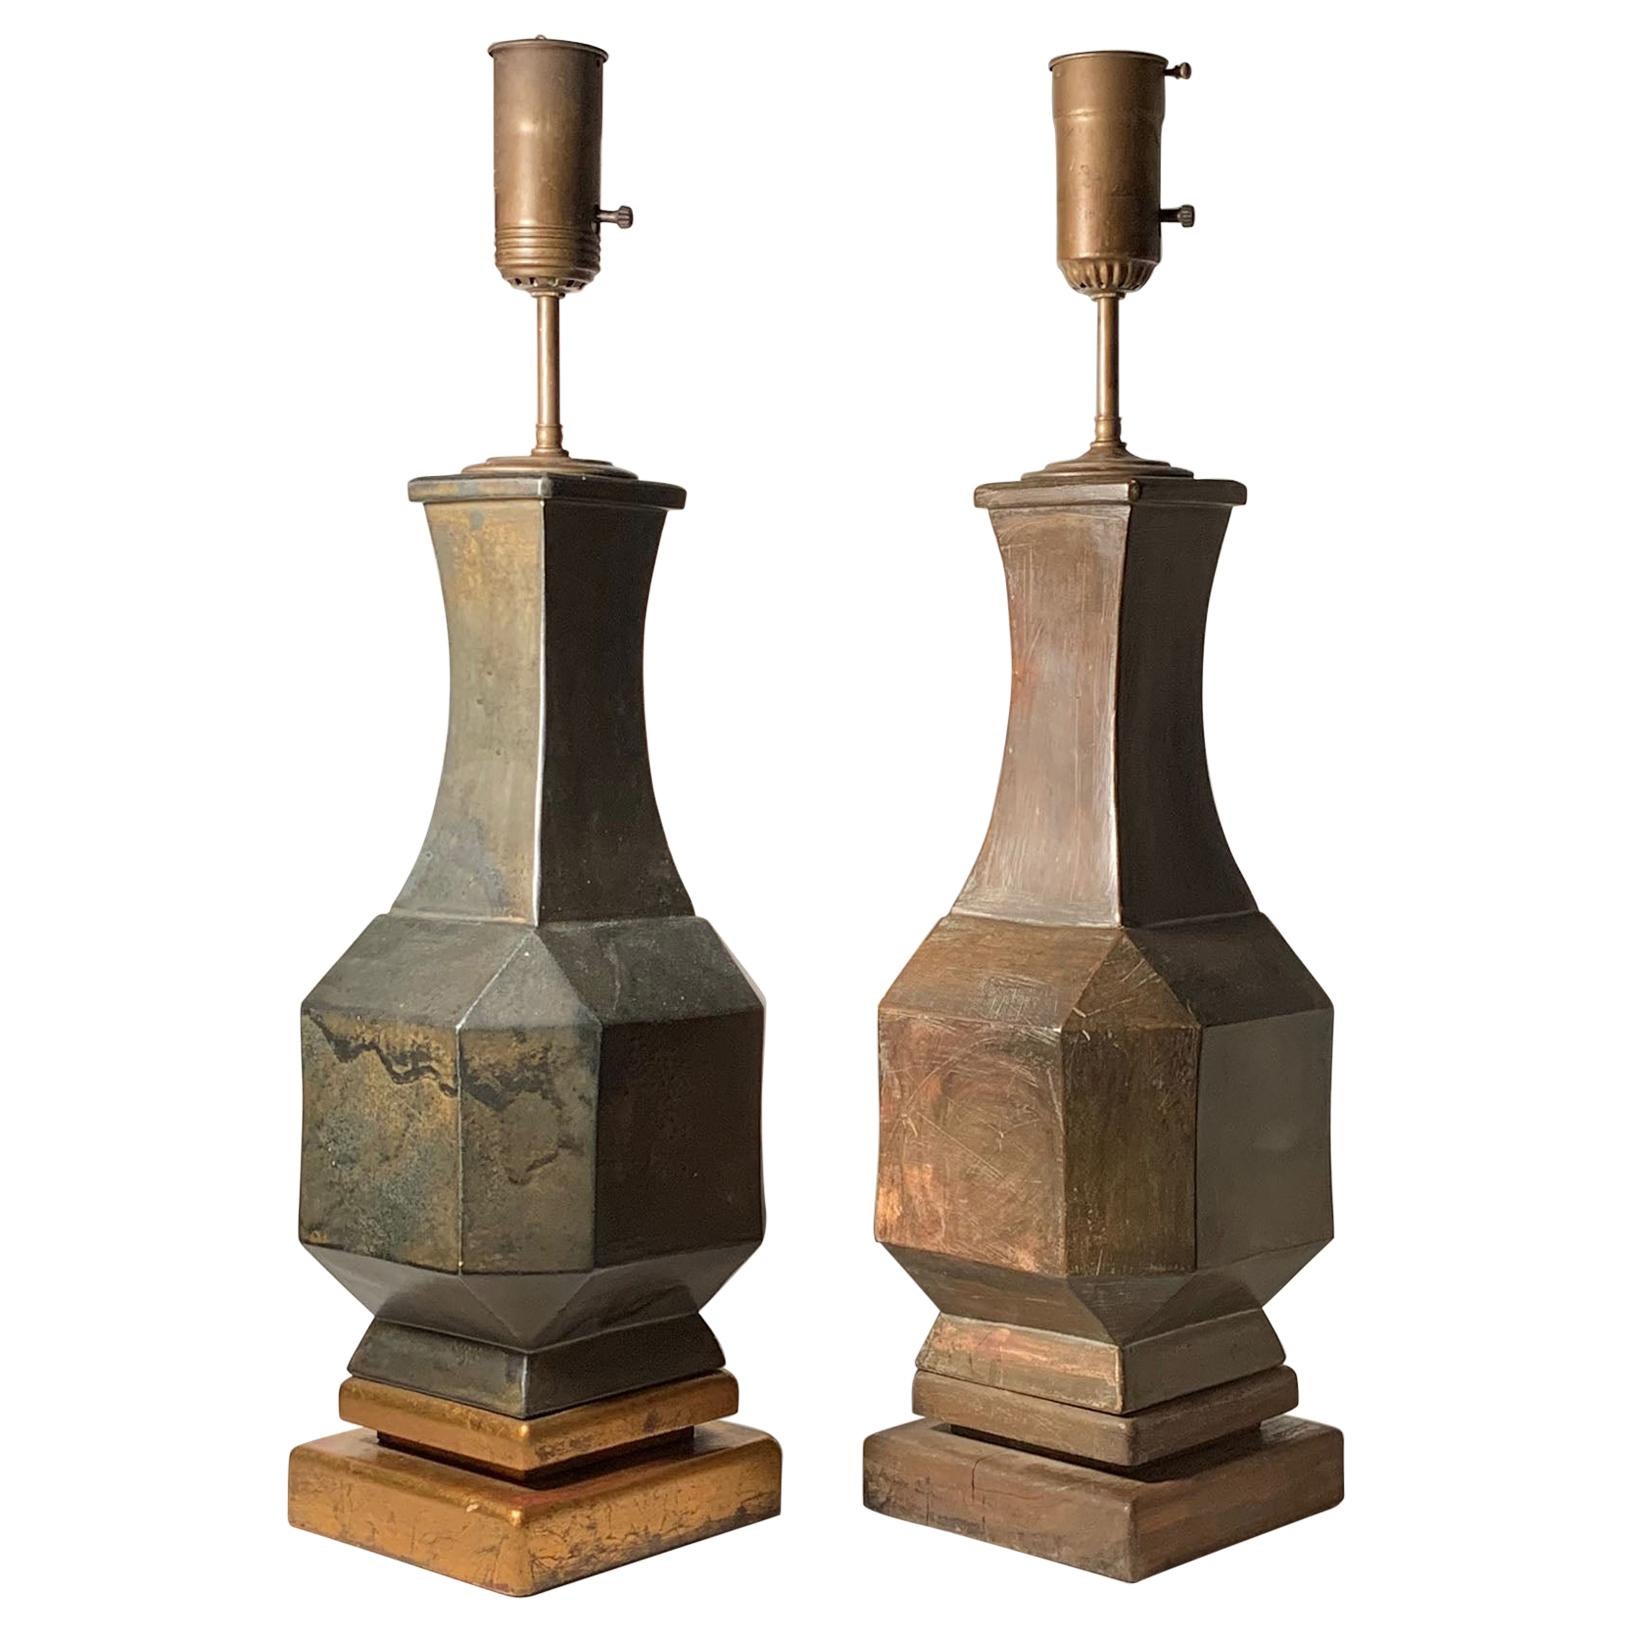 Pair of Vintage Decorator Ceramic Geometric Lamps in manner of James Mont